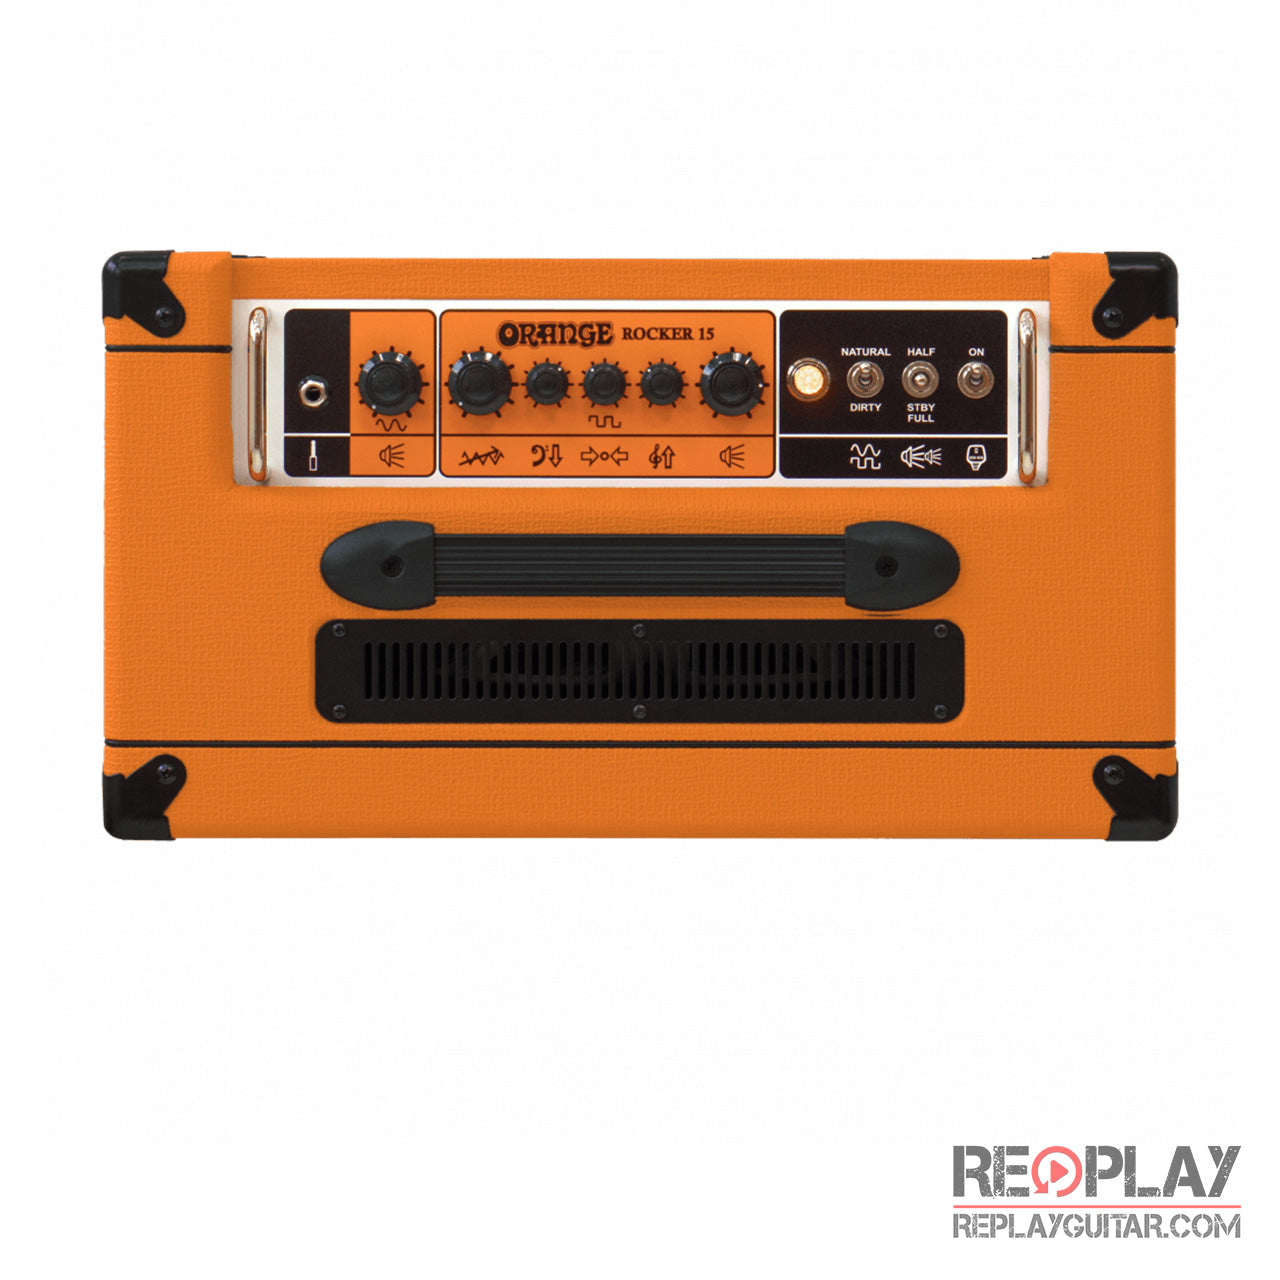 Orange Rocker 15 Orange | For Sale | Replay Guitar Exchange